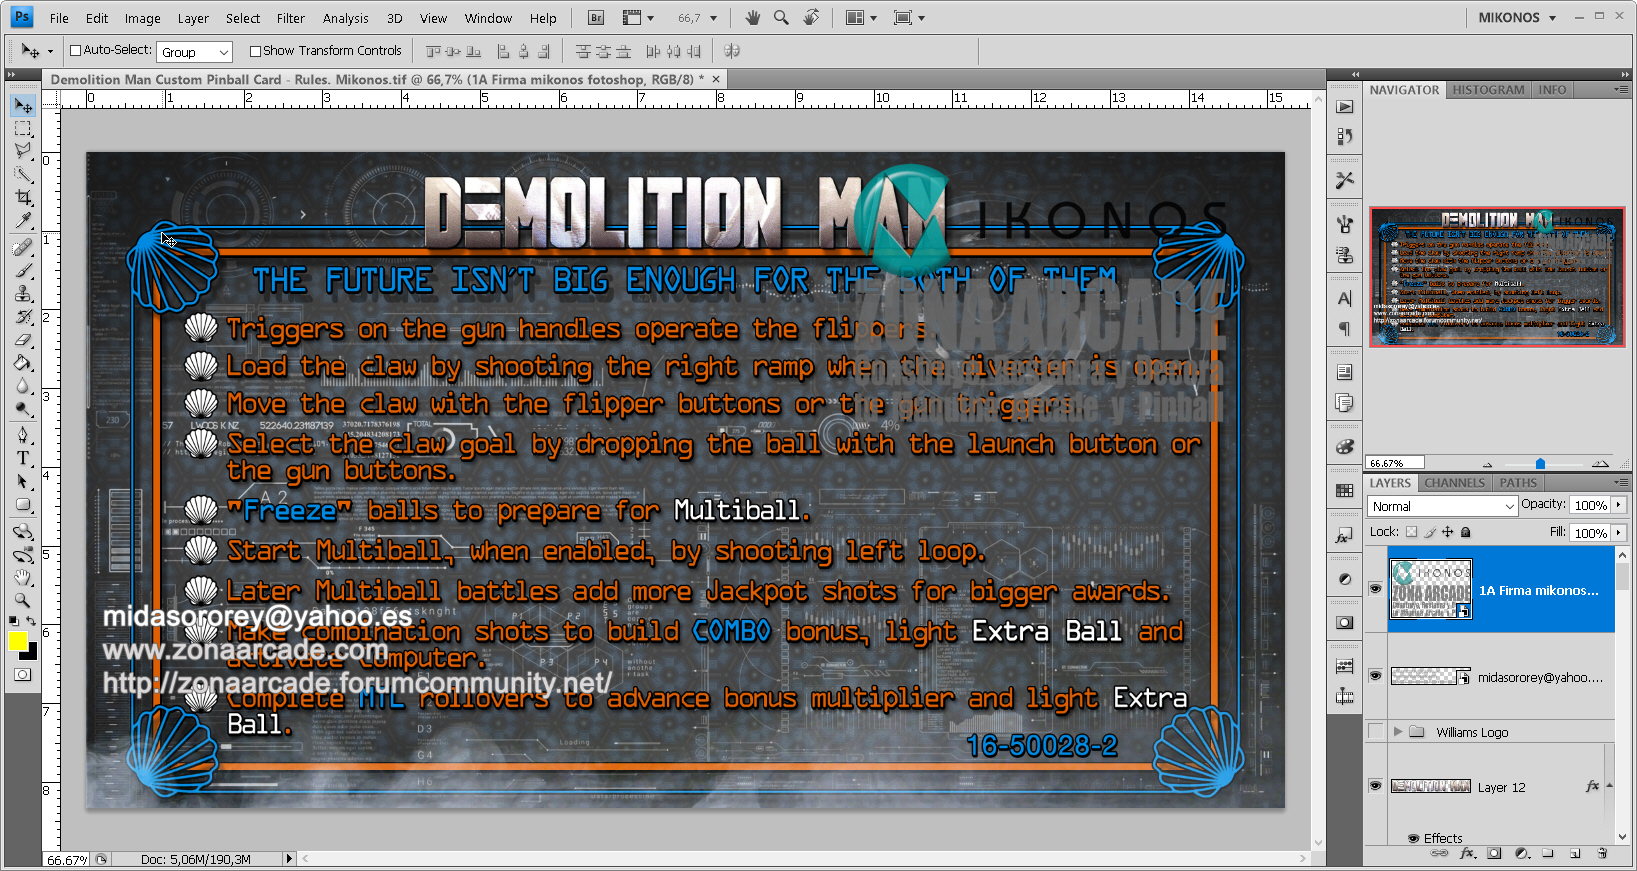 Demolition Man Pinball Card Customized - Rules. Mikonos1